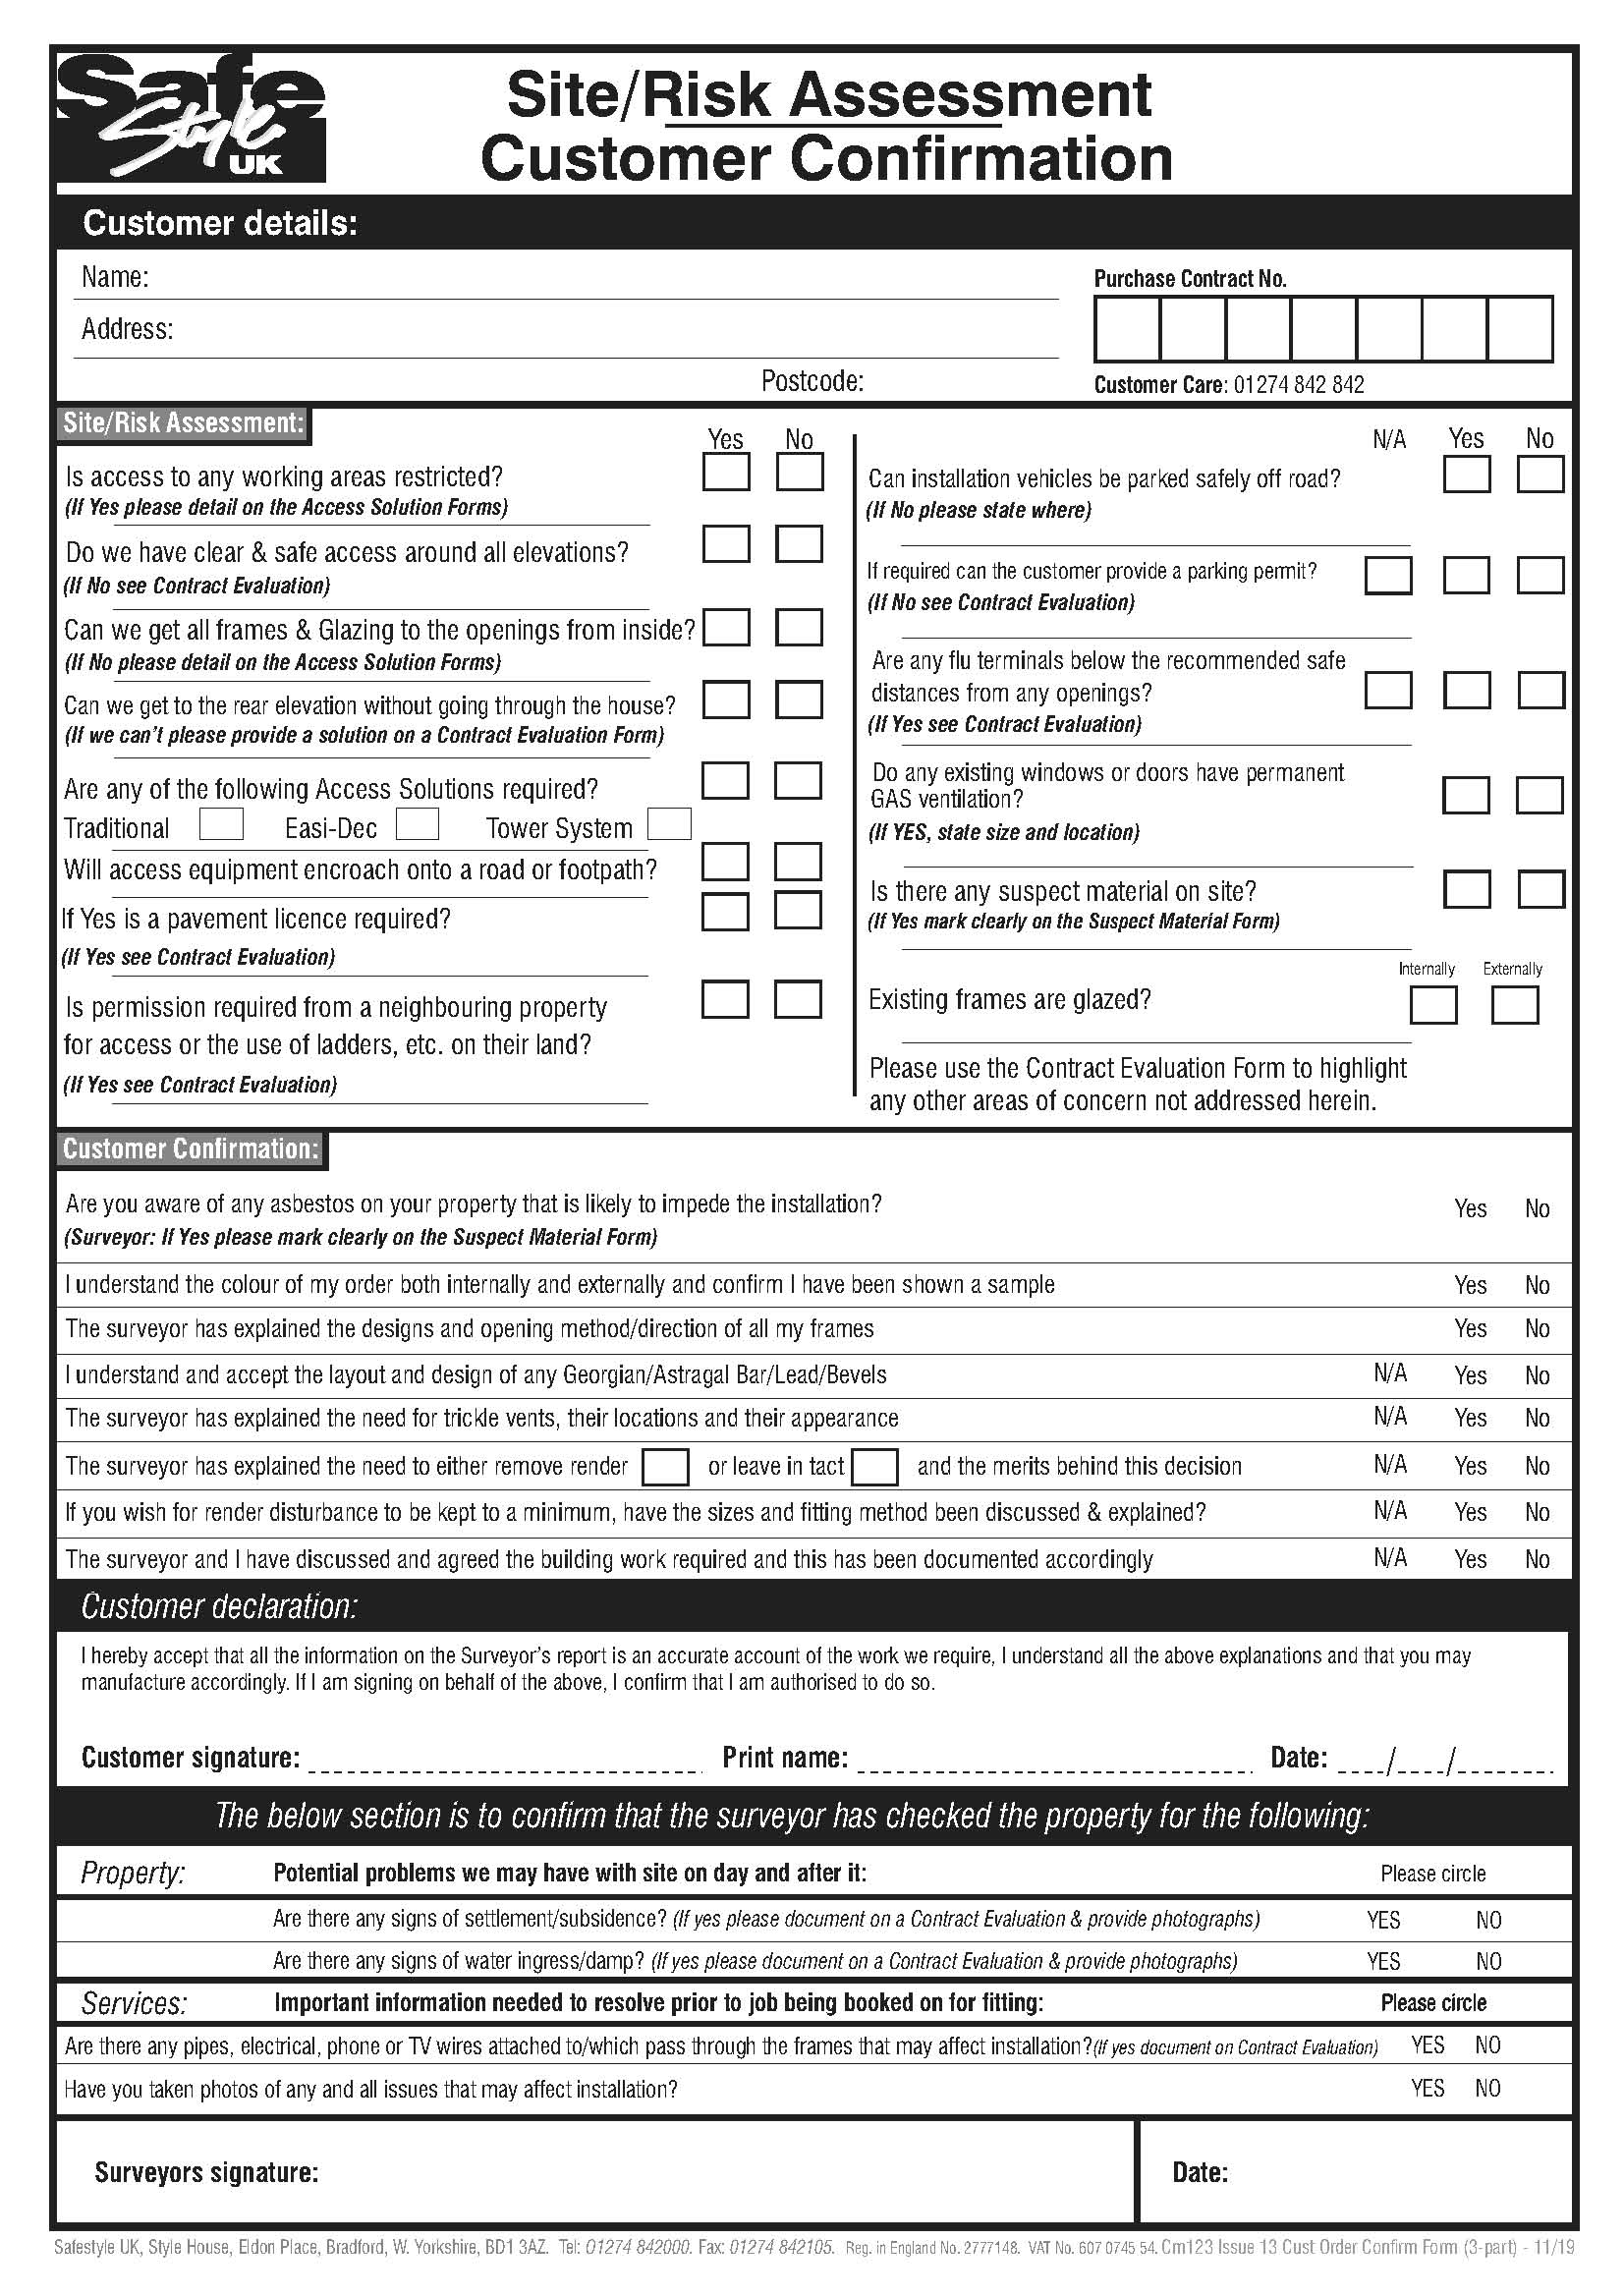 Site Assessment & Customer Confirmation Form - Nov 2019 - CNM123 - Issue 13.jpg